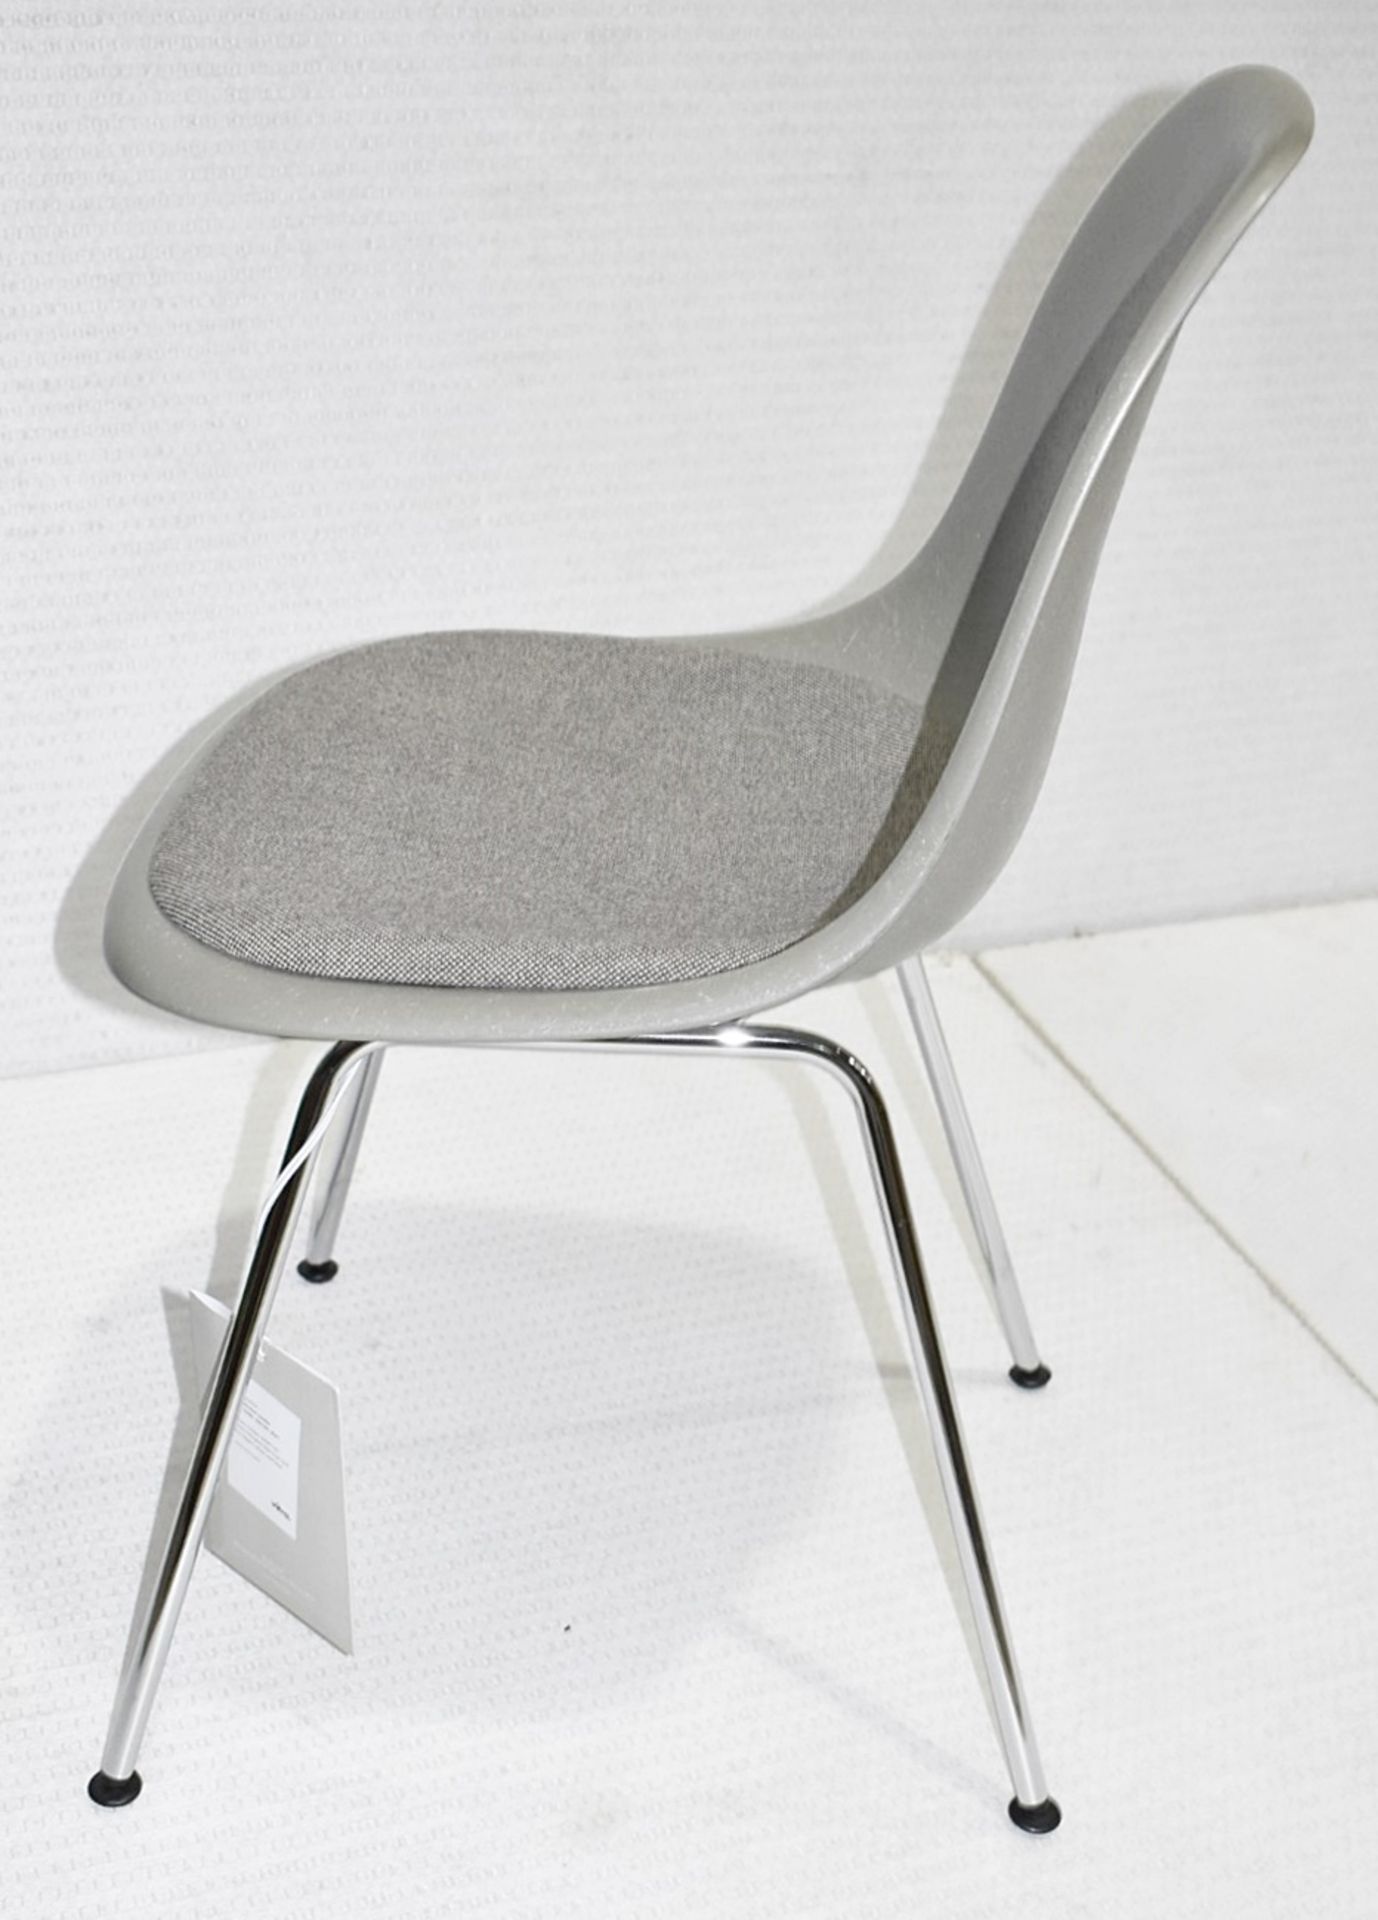 1 x VITRA Eames DSX Designer Fibreglass Chair in Grey - Original RRP £615.00 - Image 3 of 13